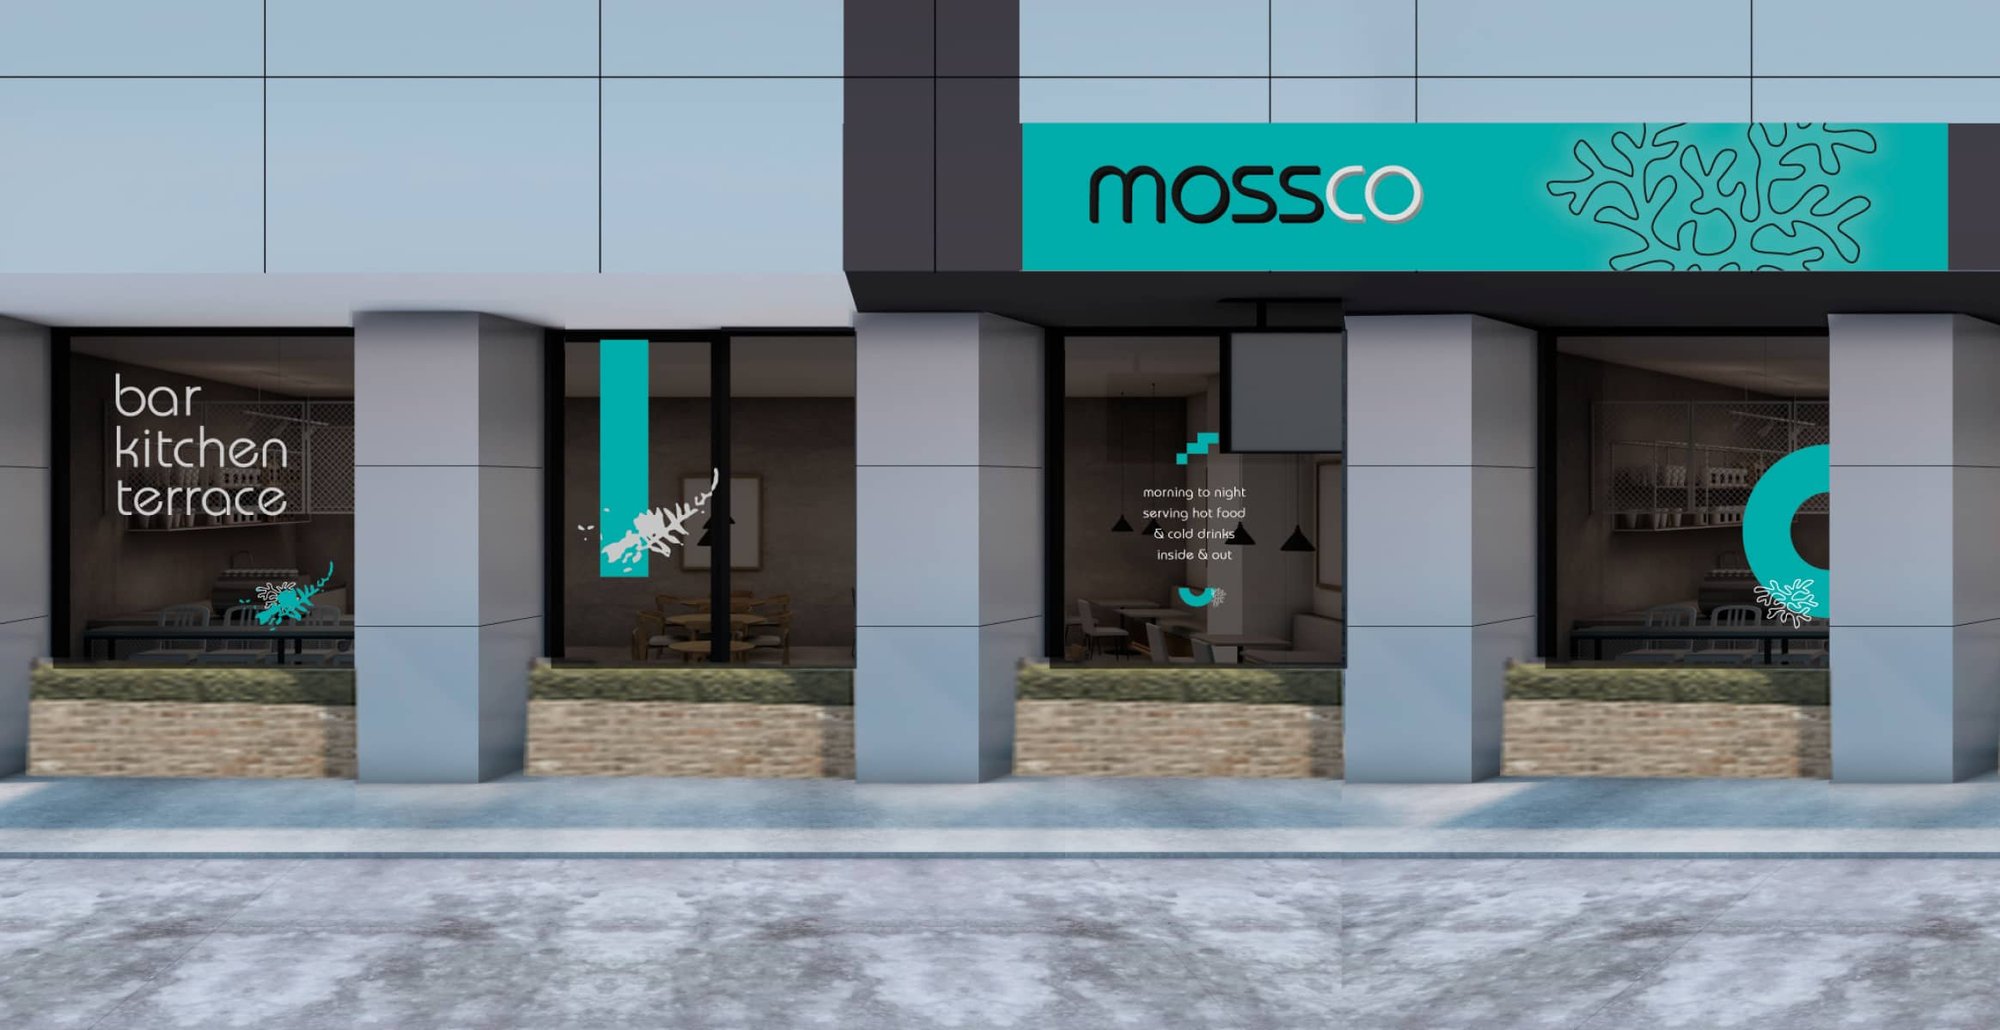 mossco_outdoor-signage